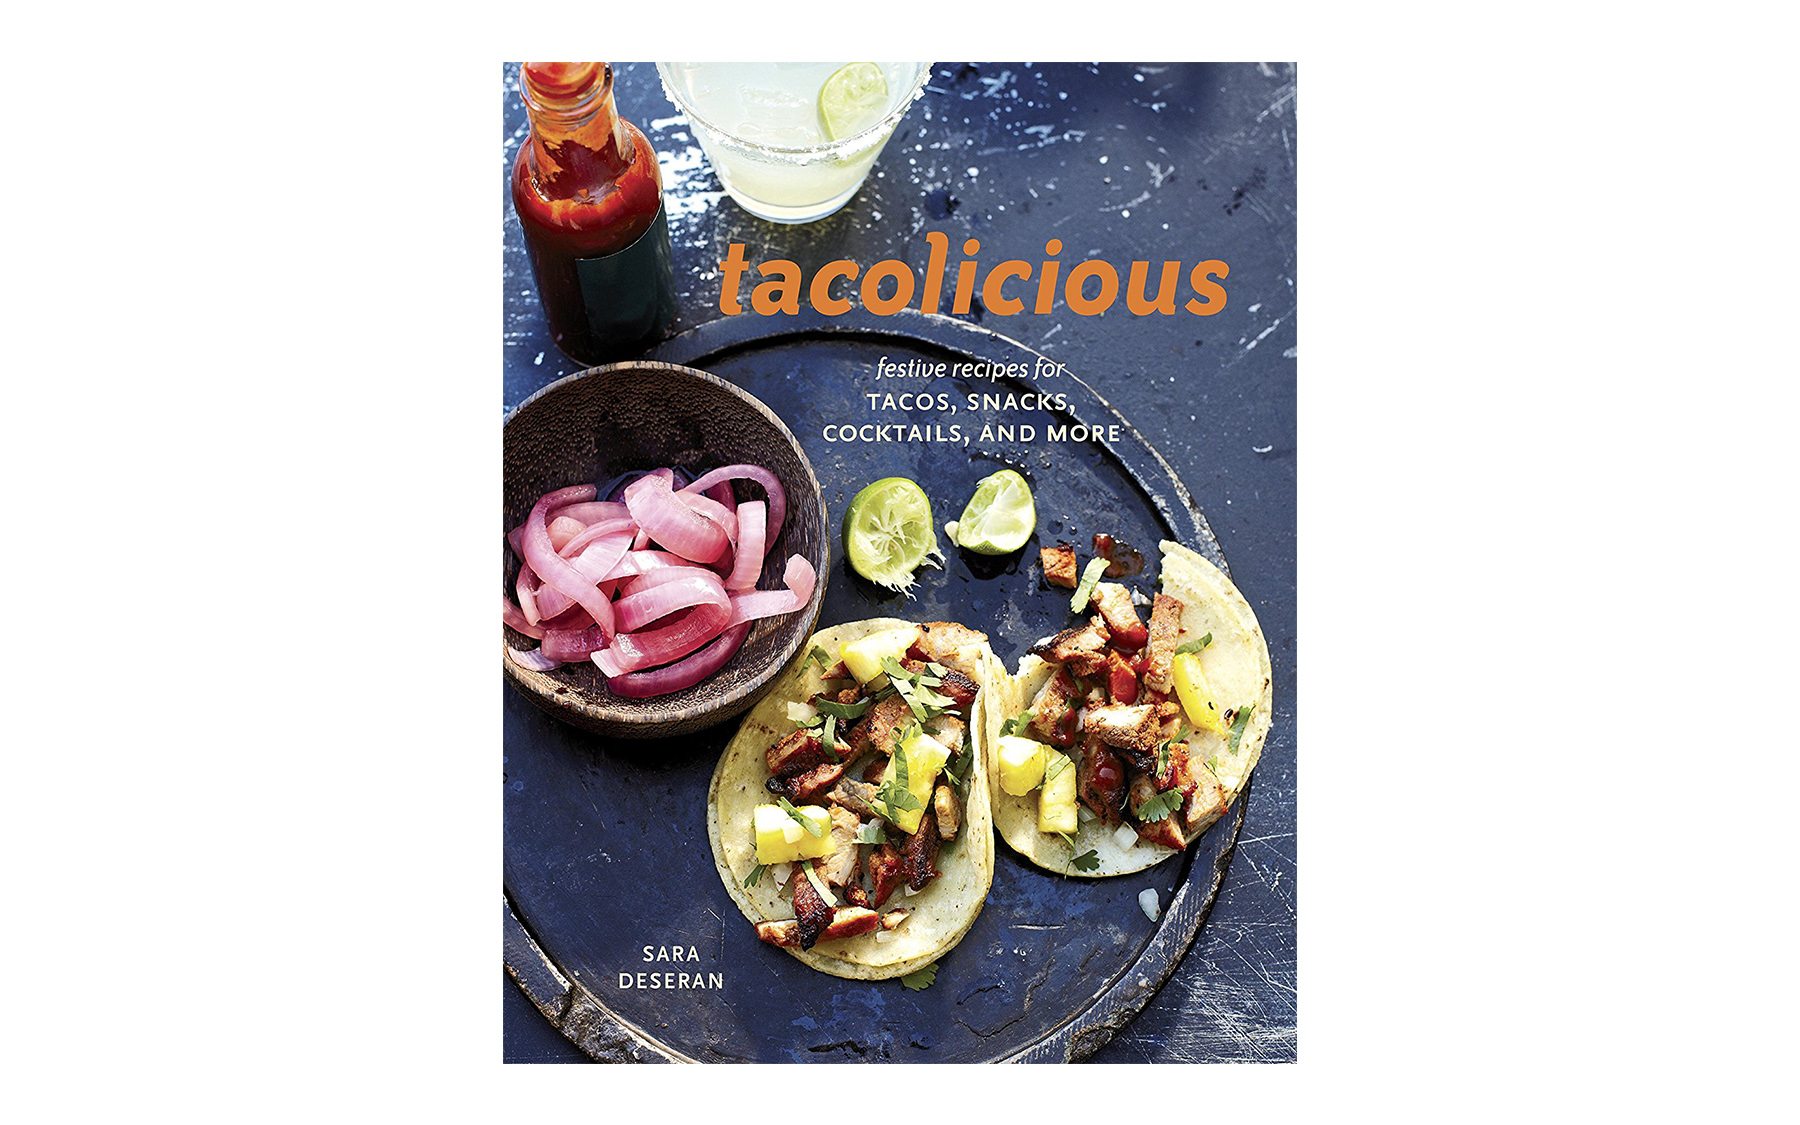 https://49miles.com/wp-content/uploads/2016/12/tacolicious-cookbook.jpg